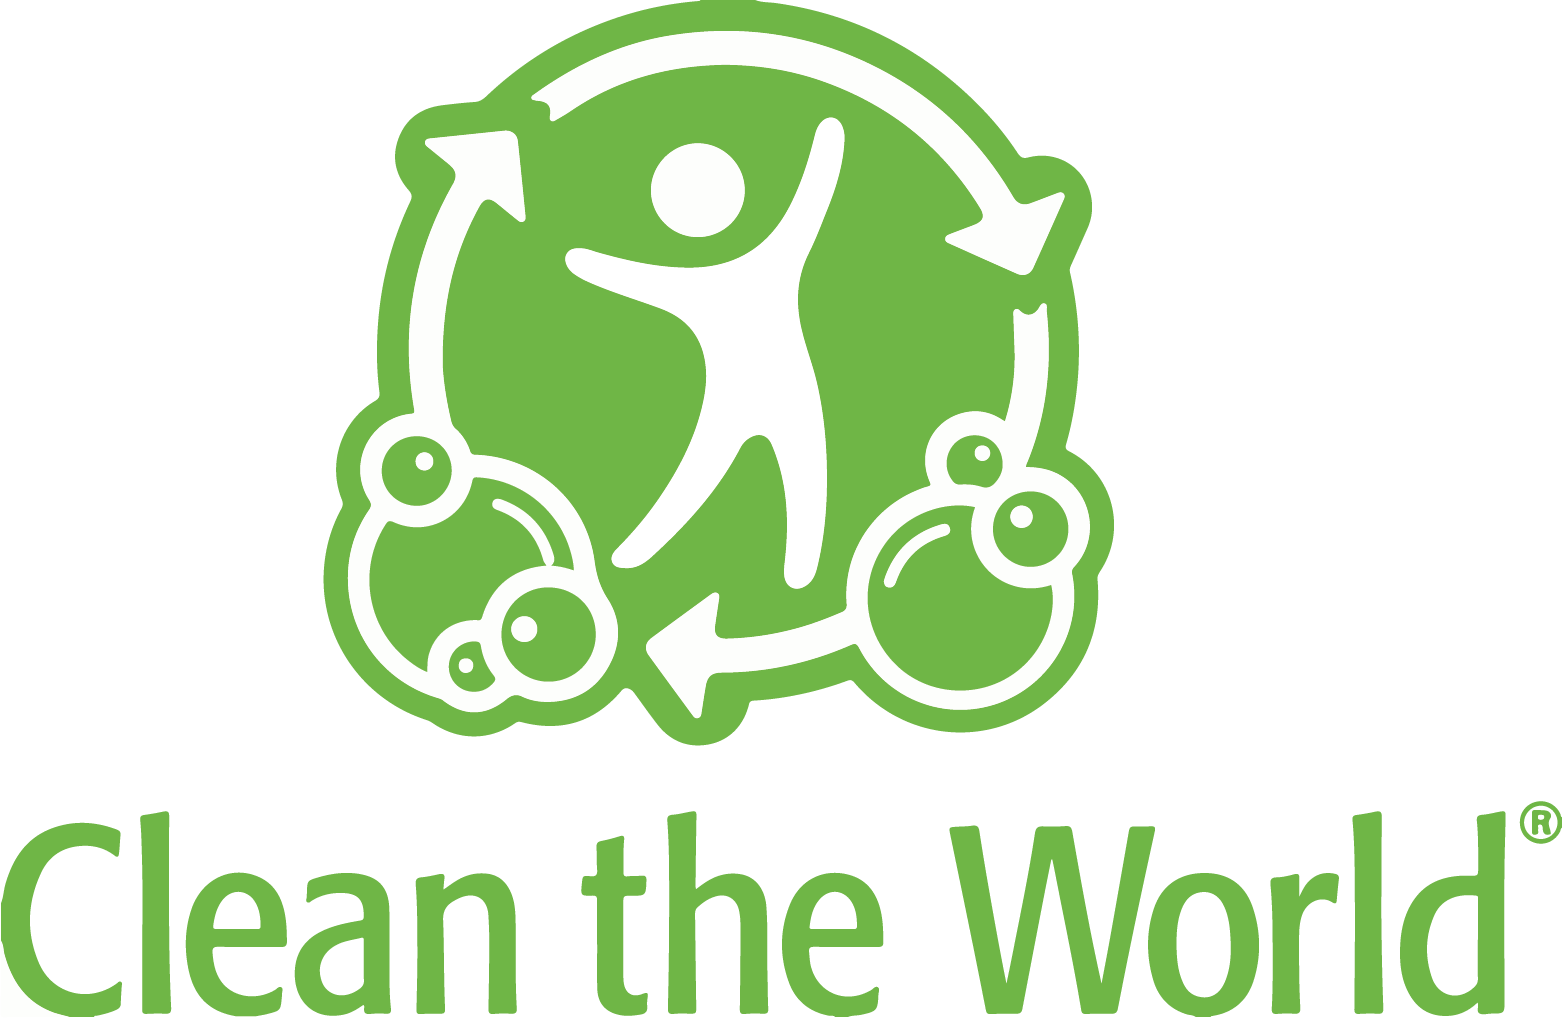 Clean the World logo